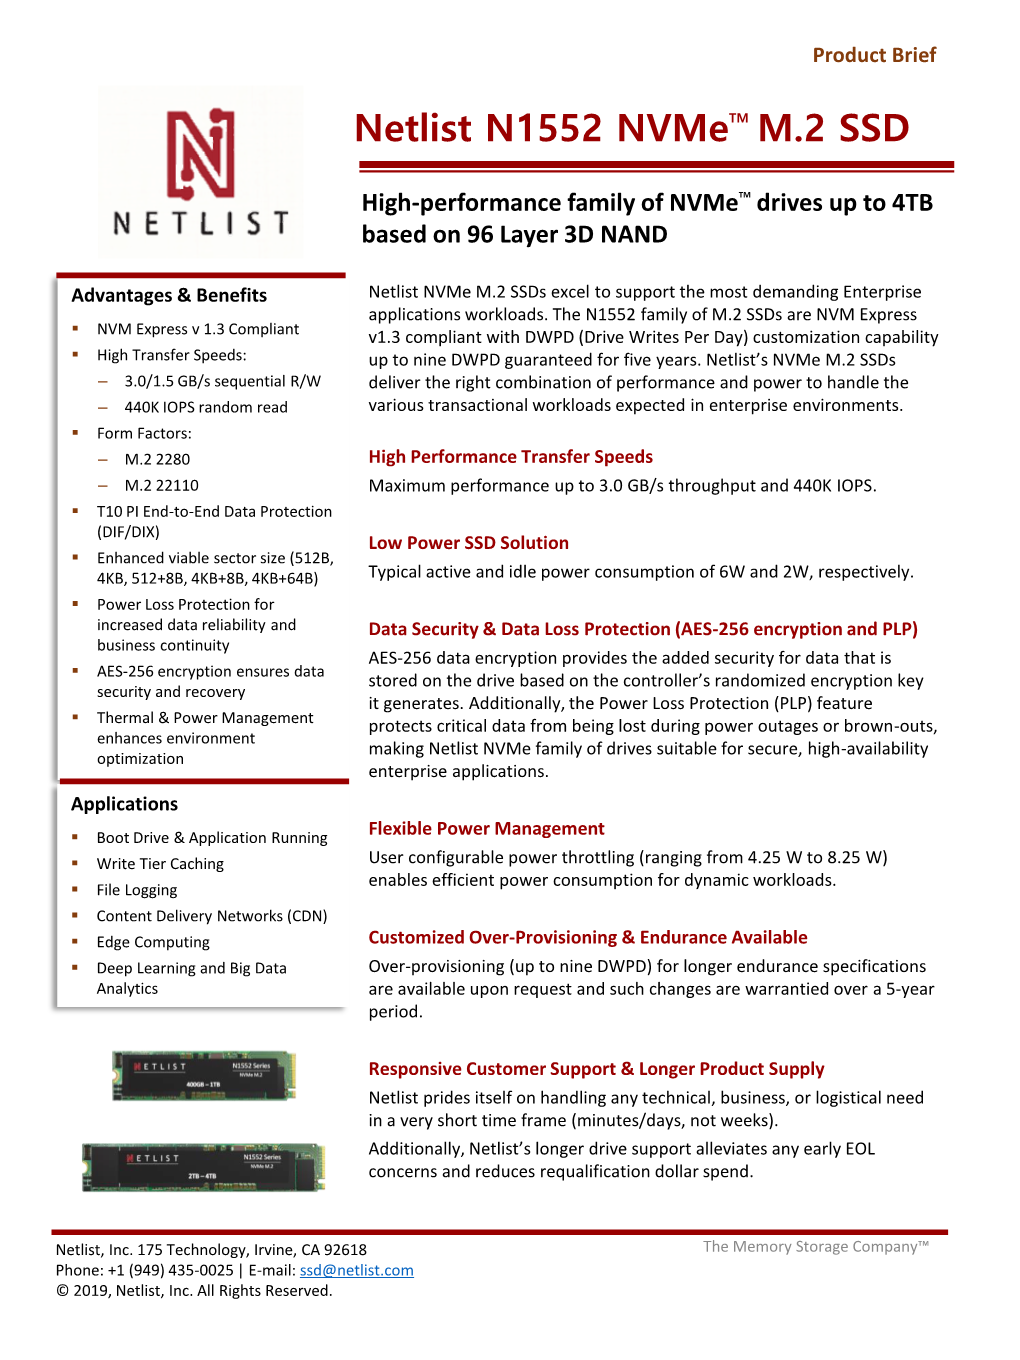 Netlist N1552 Nvme M.2 SSD Product Brief